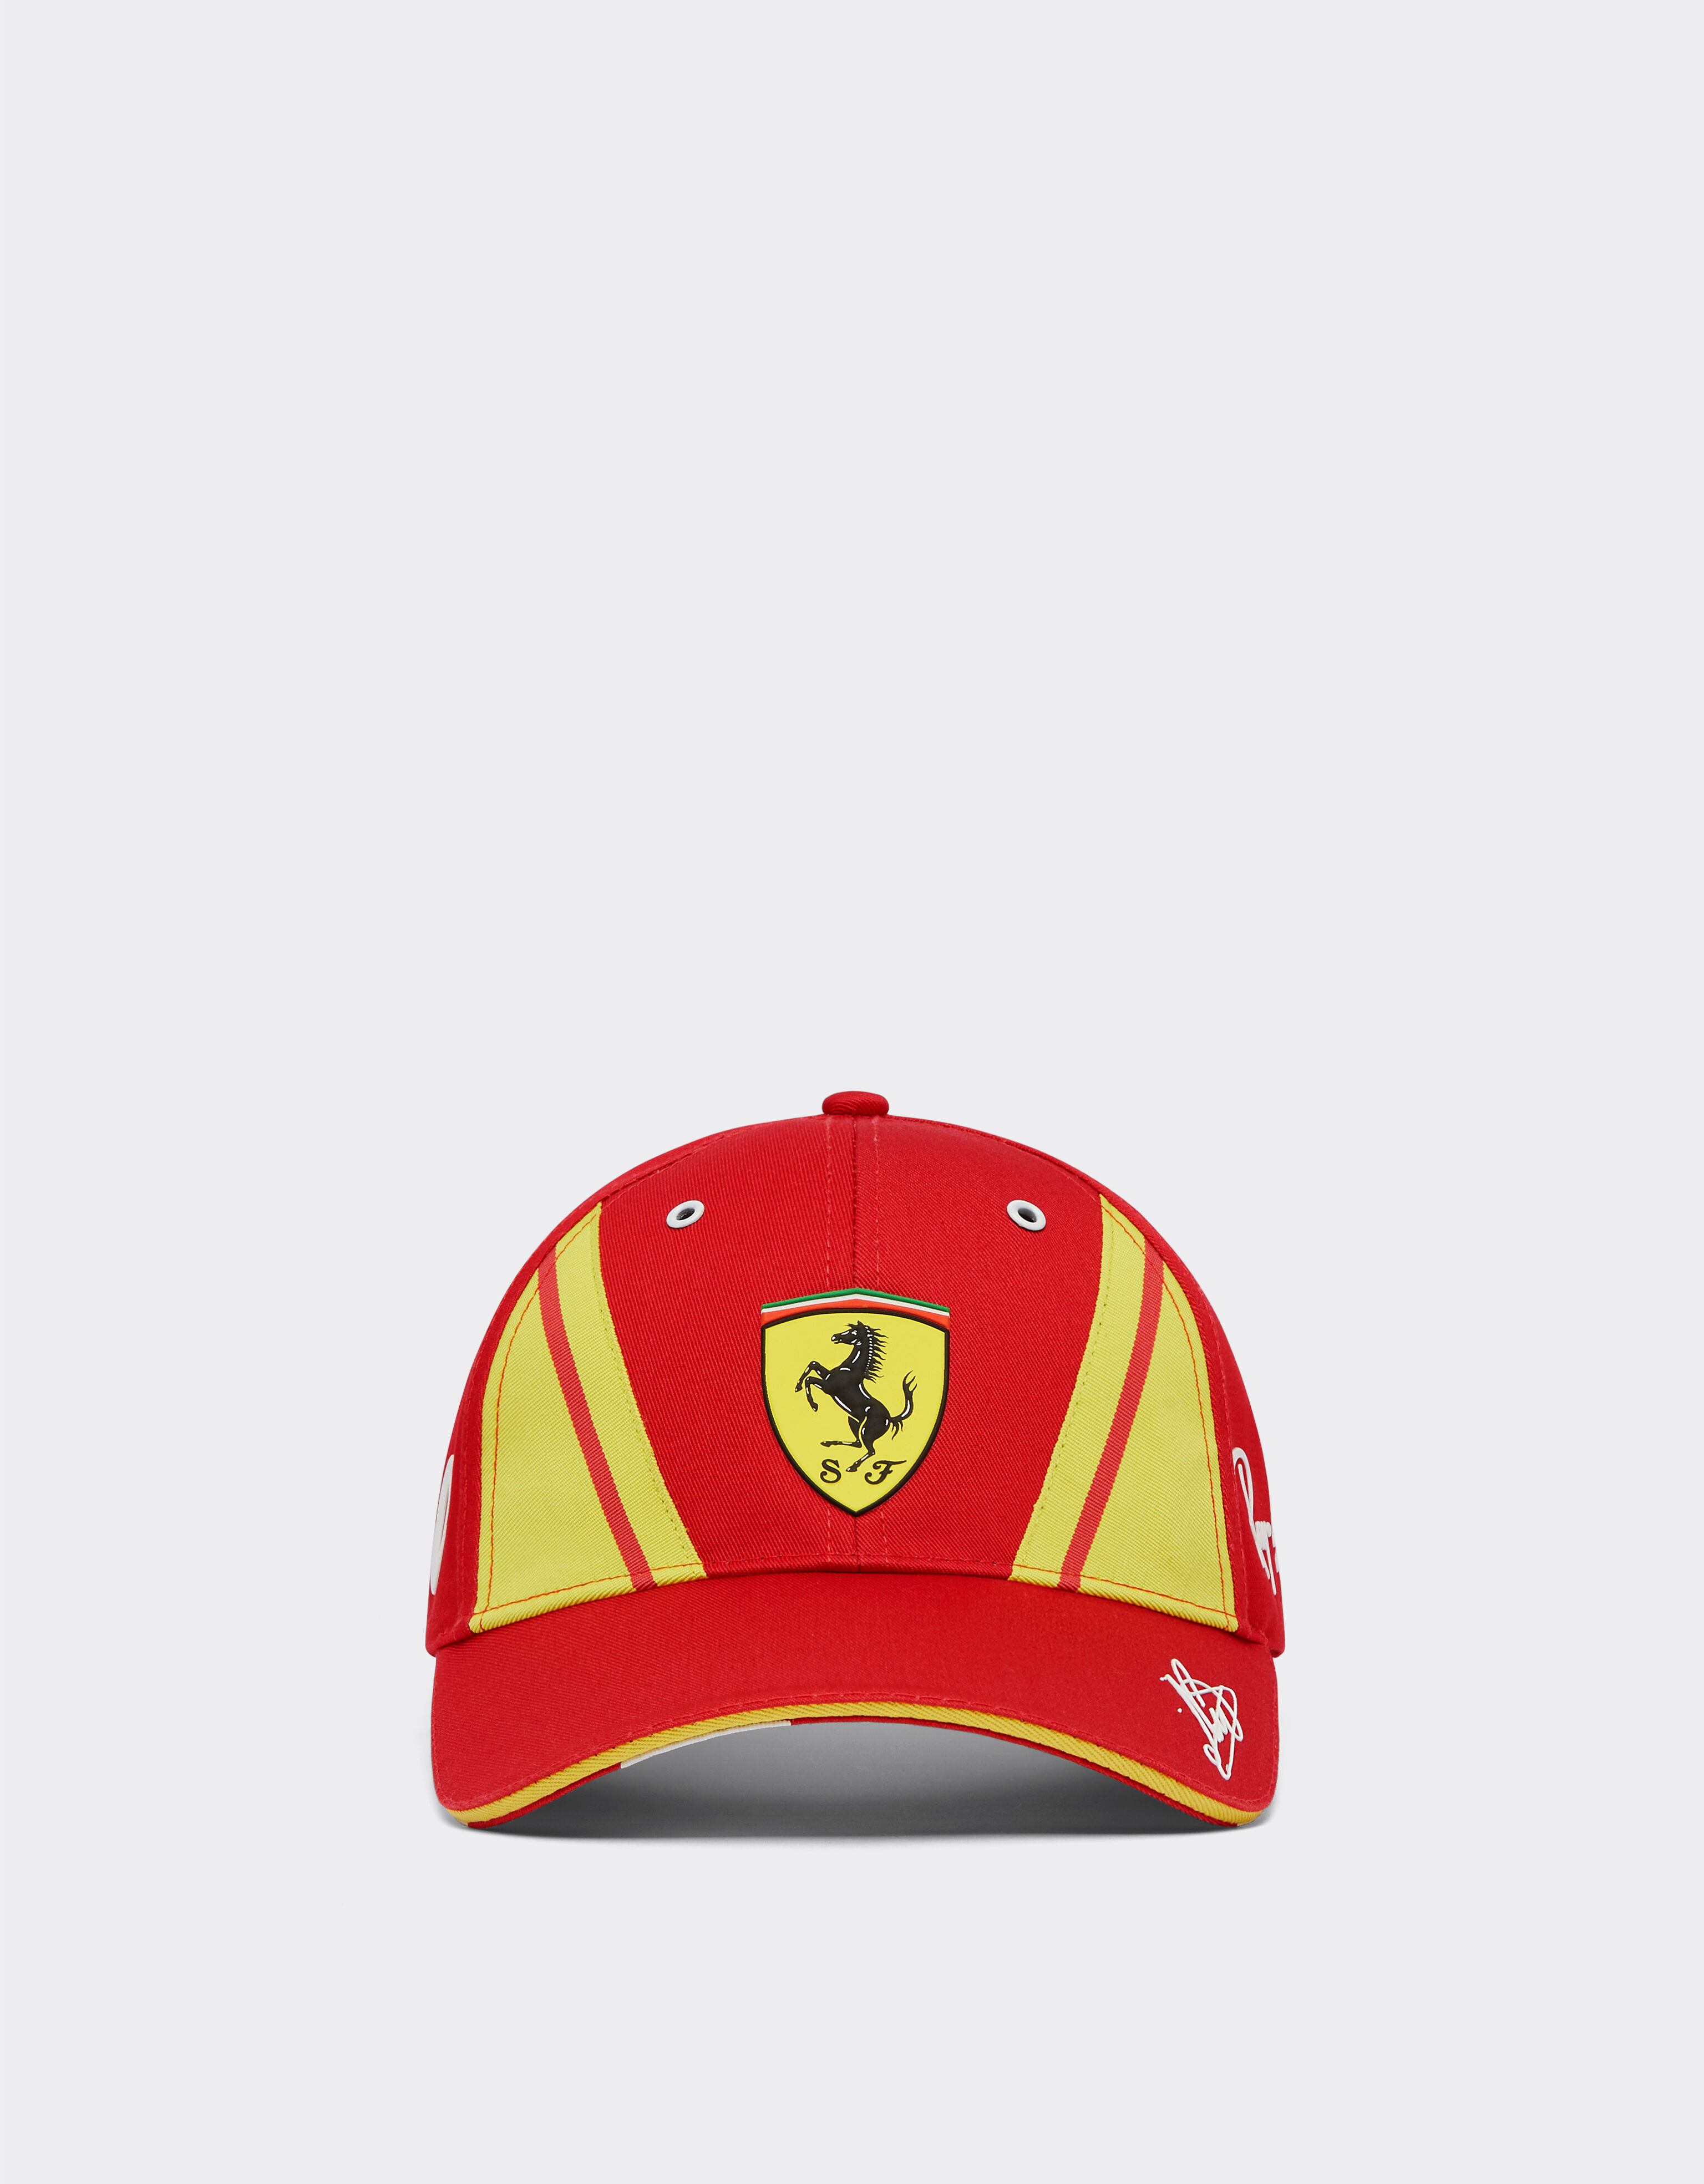 Ferrari Ferrari Hypercar ハット ニールセン - リミテッドエディション レッド F1324f